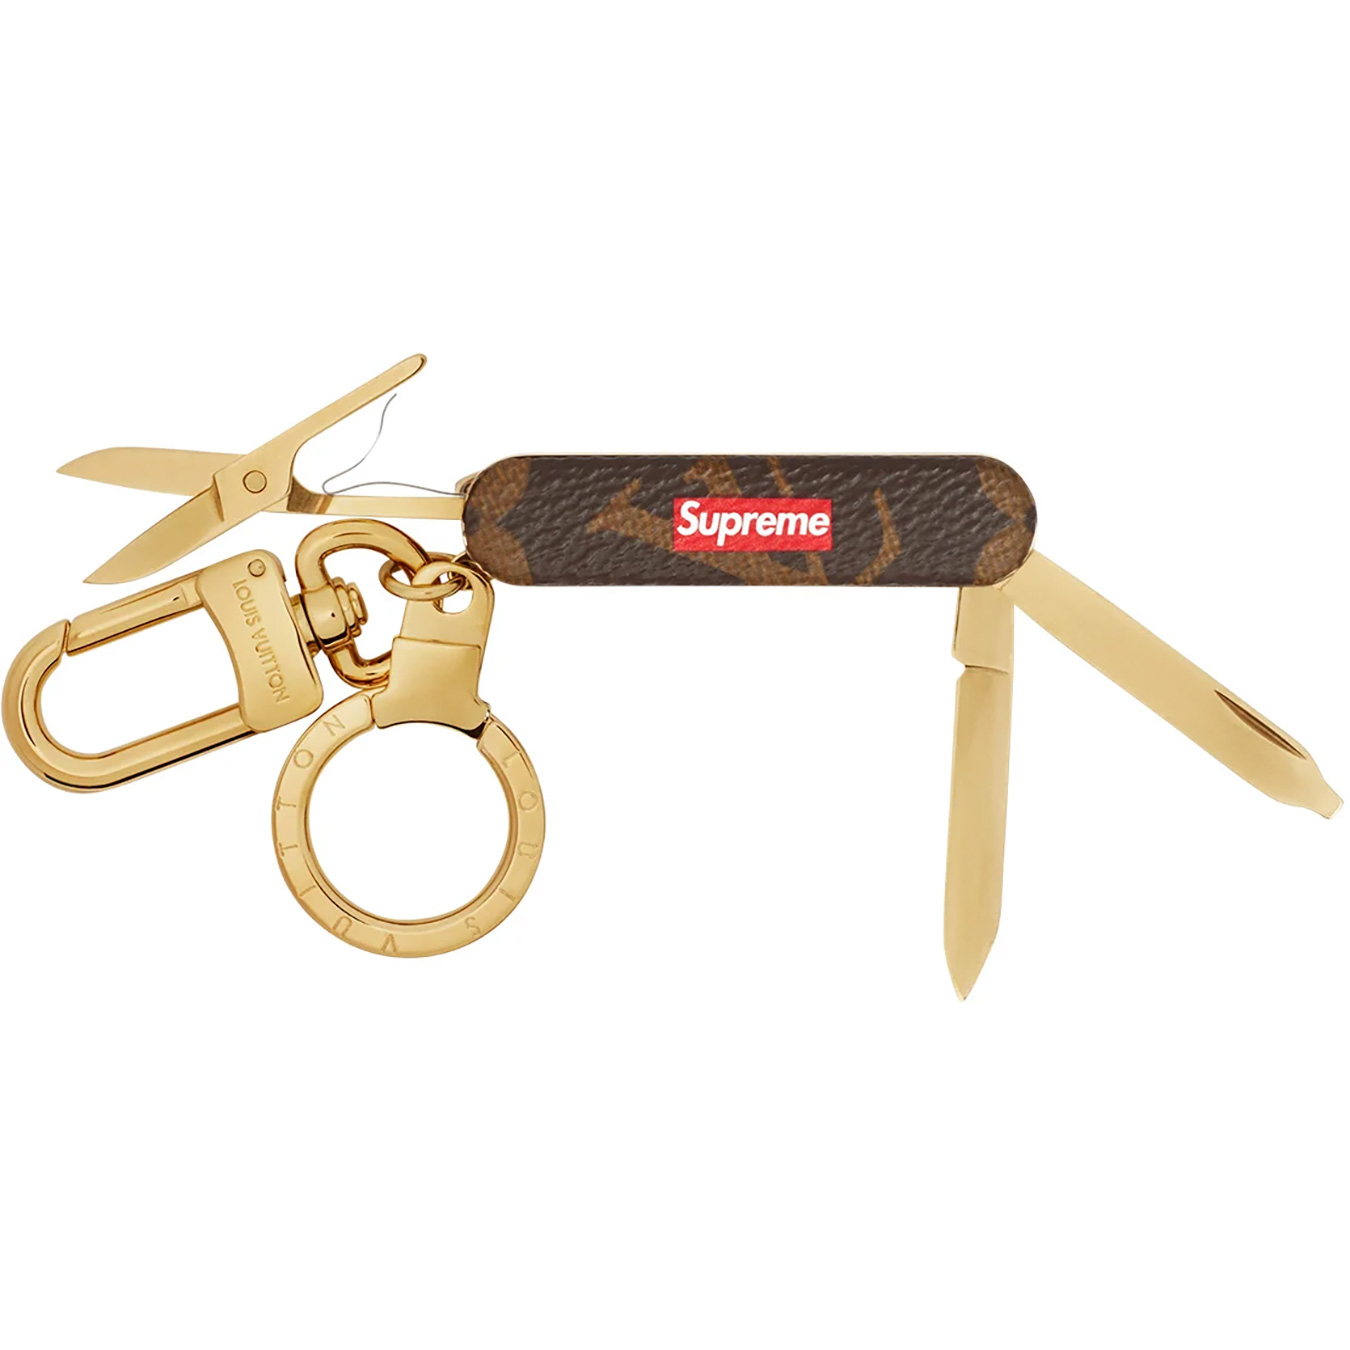 Louis Vuitton/Supreme Pocket Knife Keychain